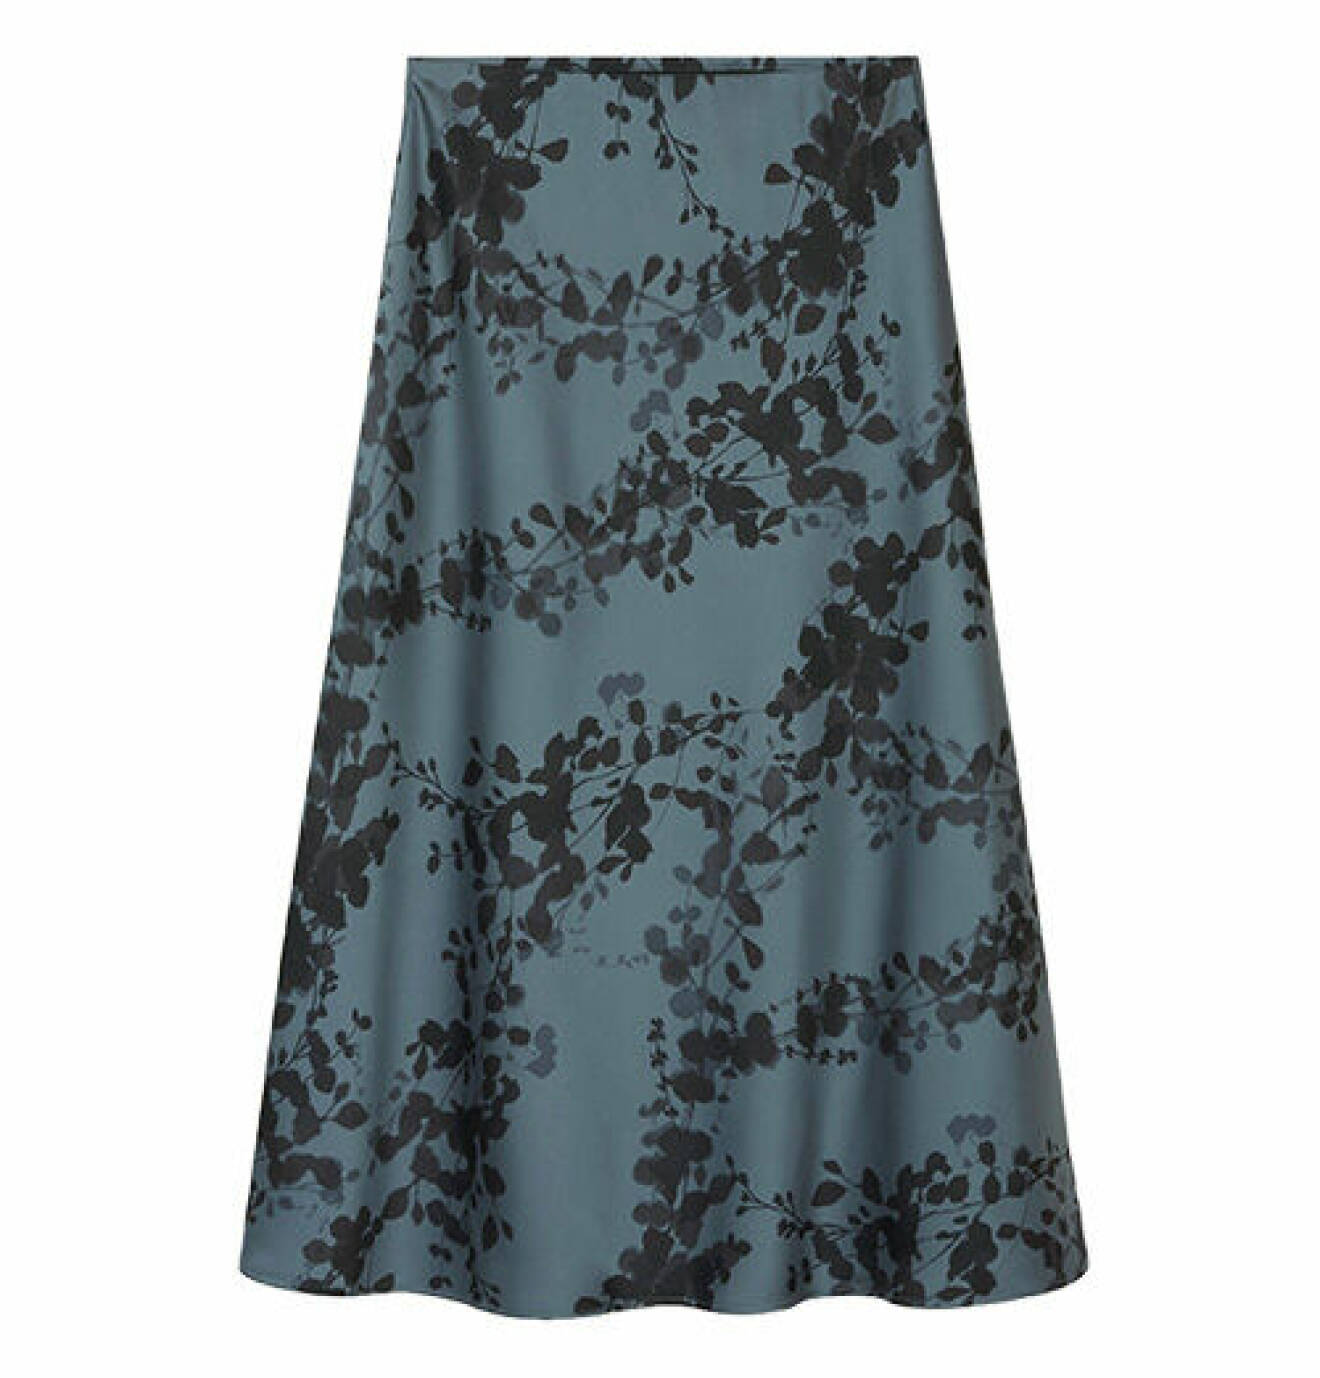 blå blommig kjol från Stockh lm Studio/MQ Marqet